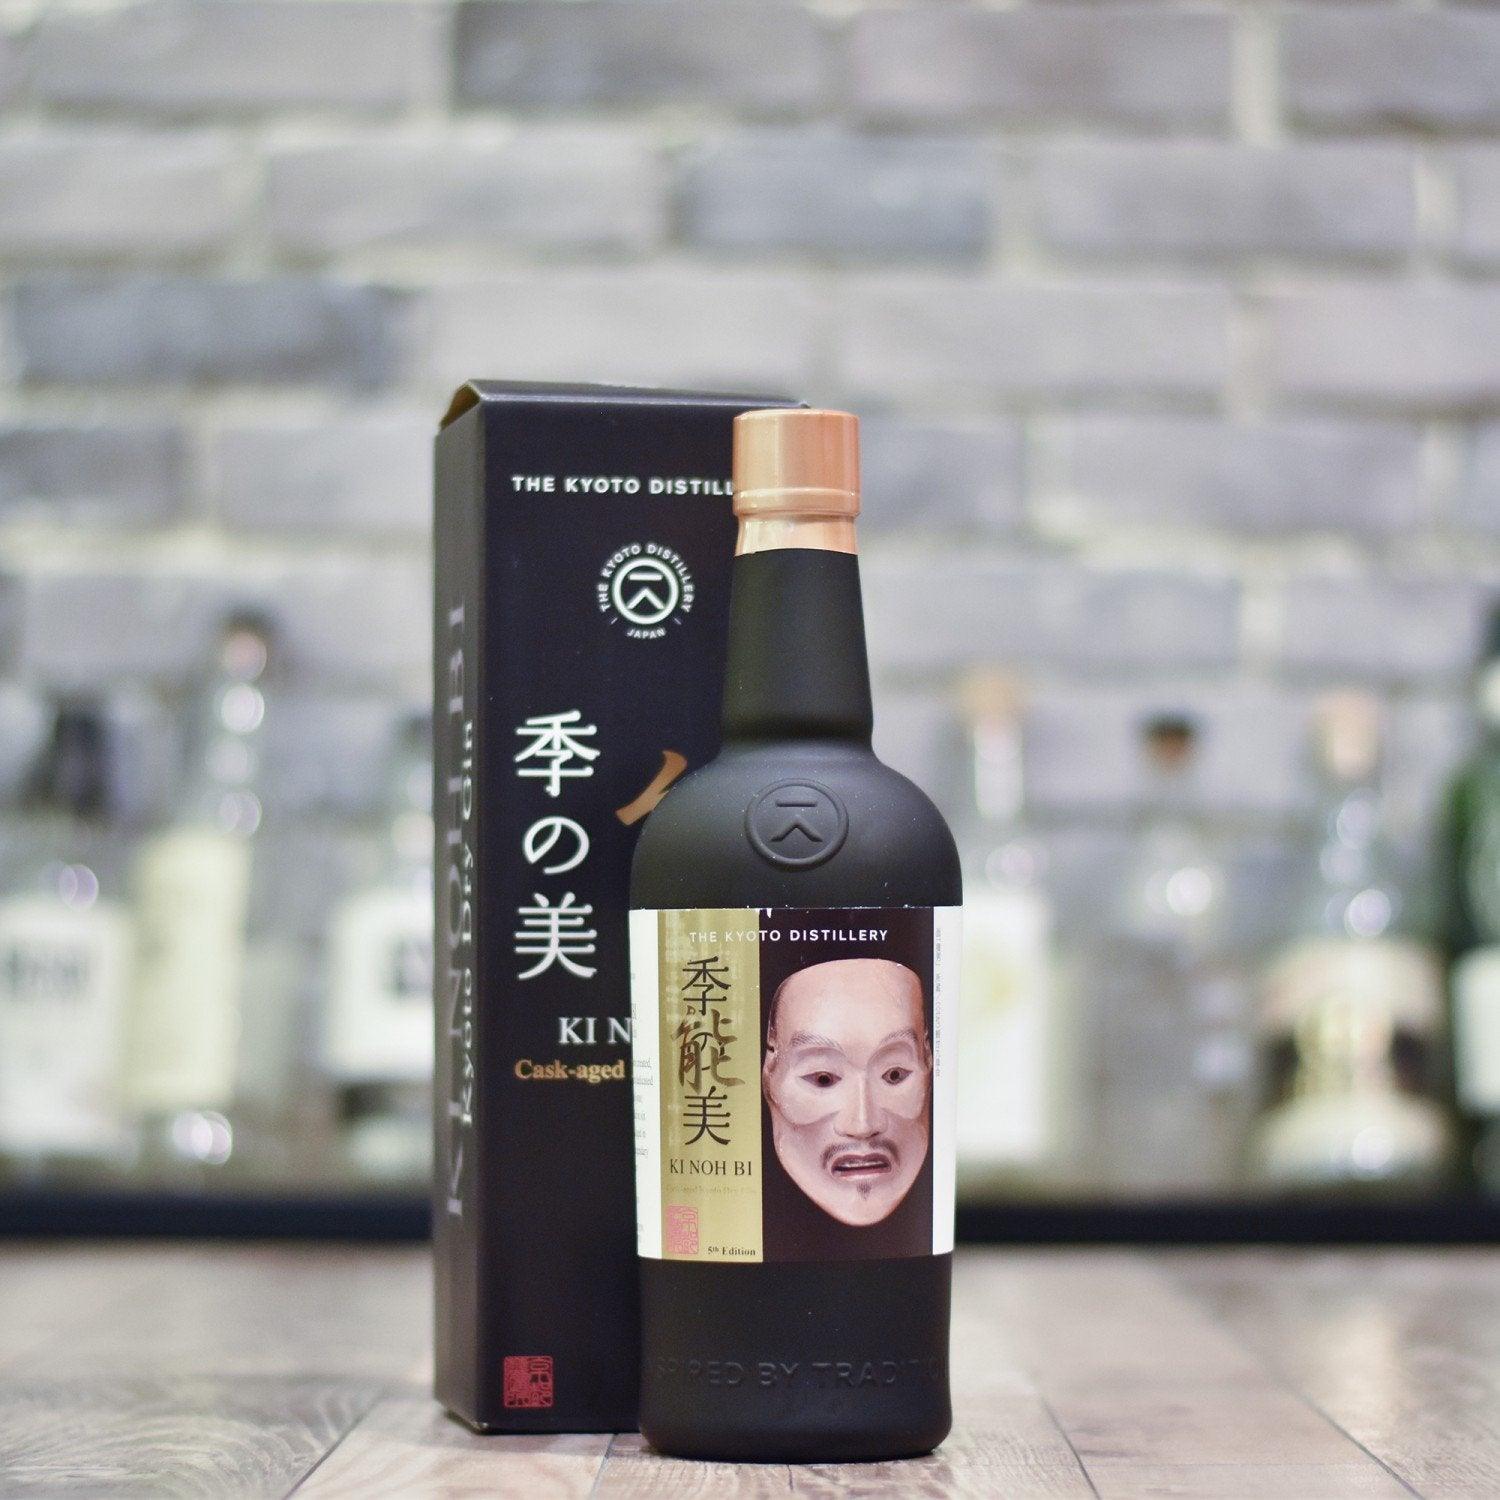 KI NOH BI Cask-aged Kyoto Dry Gin 5th Edition - Caroni Cask - The Rare Malt